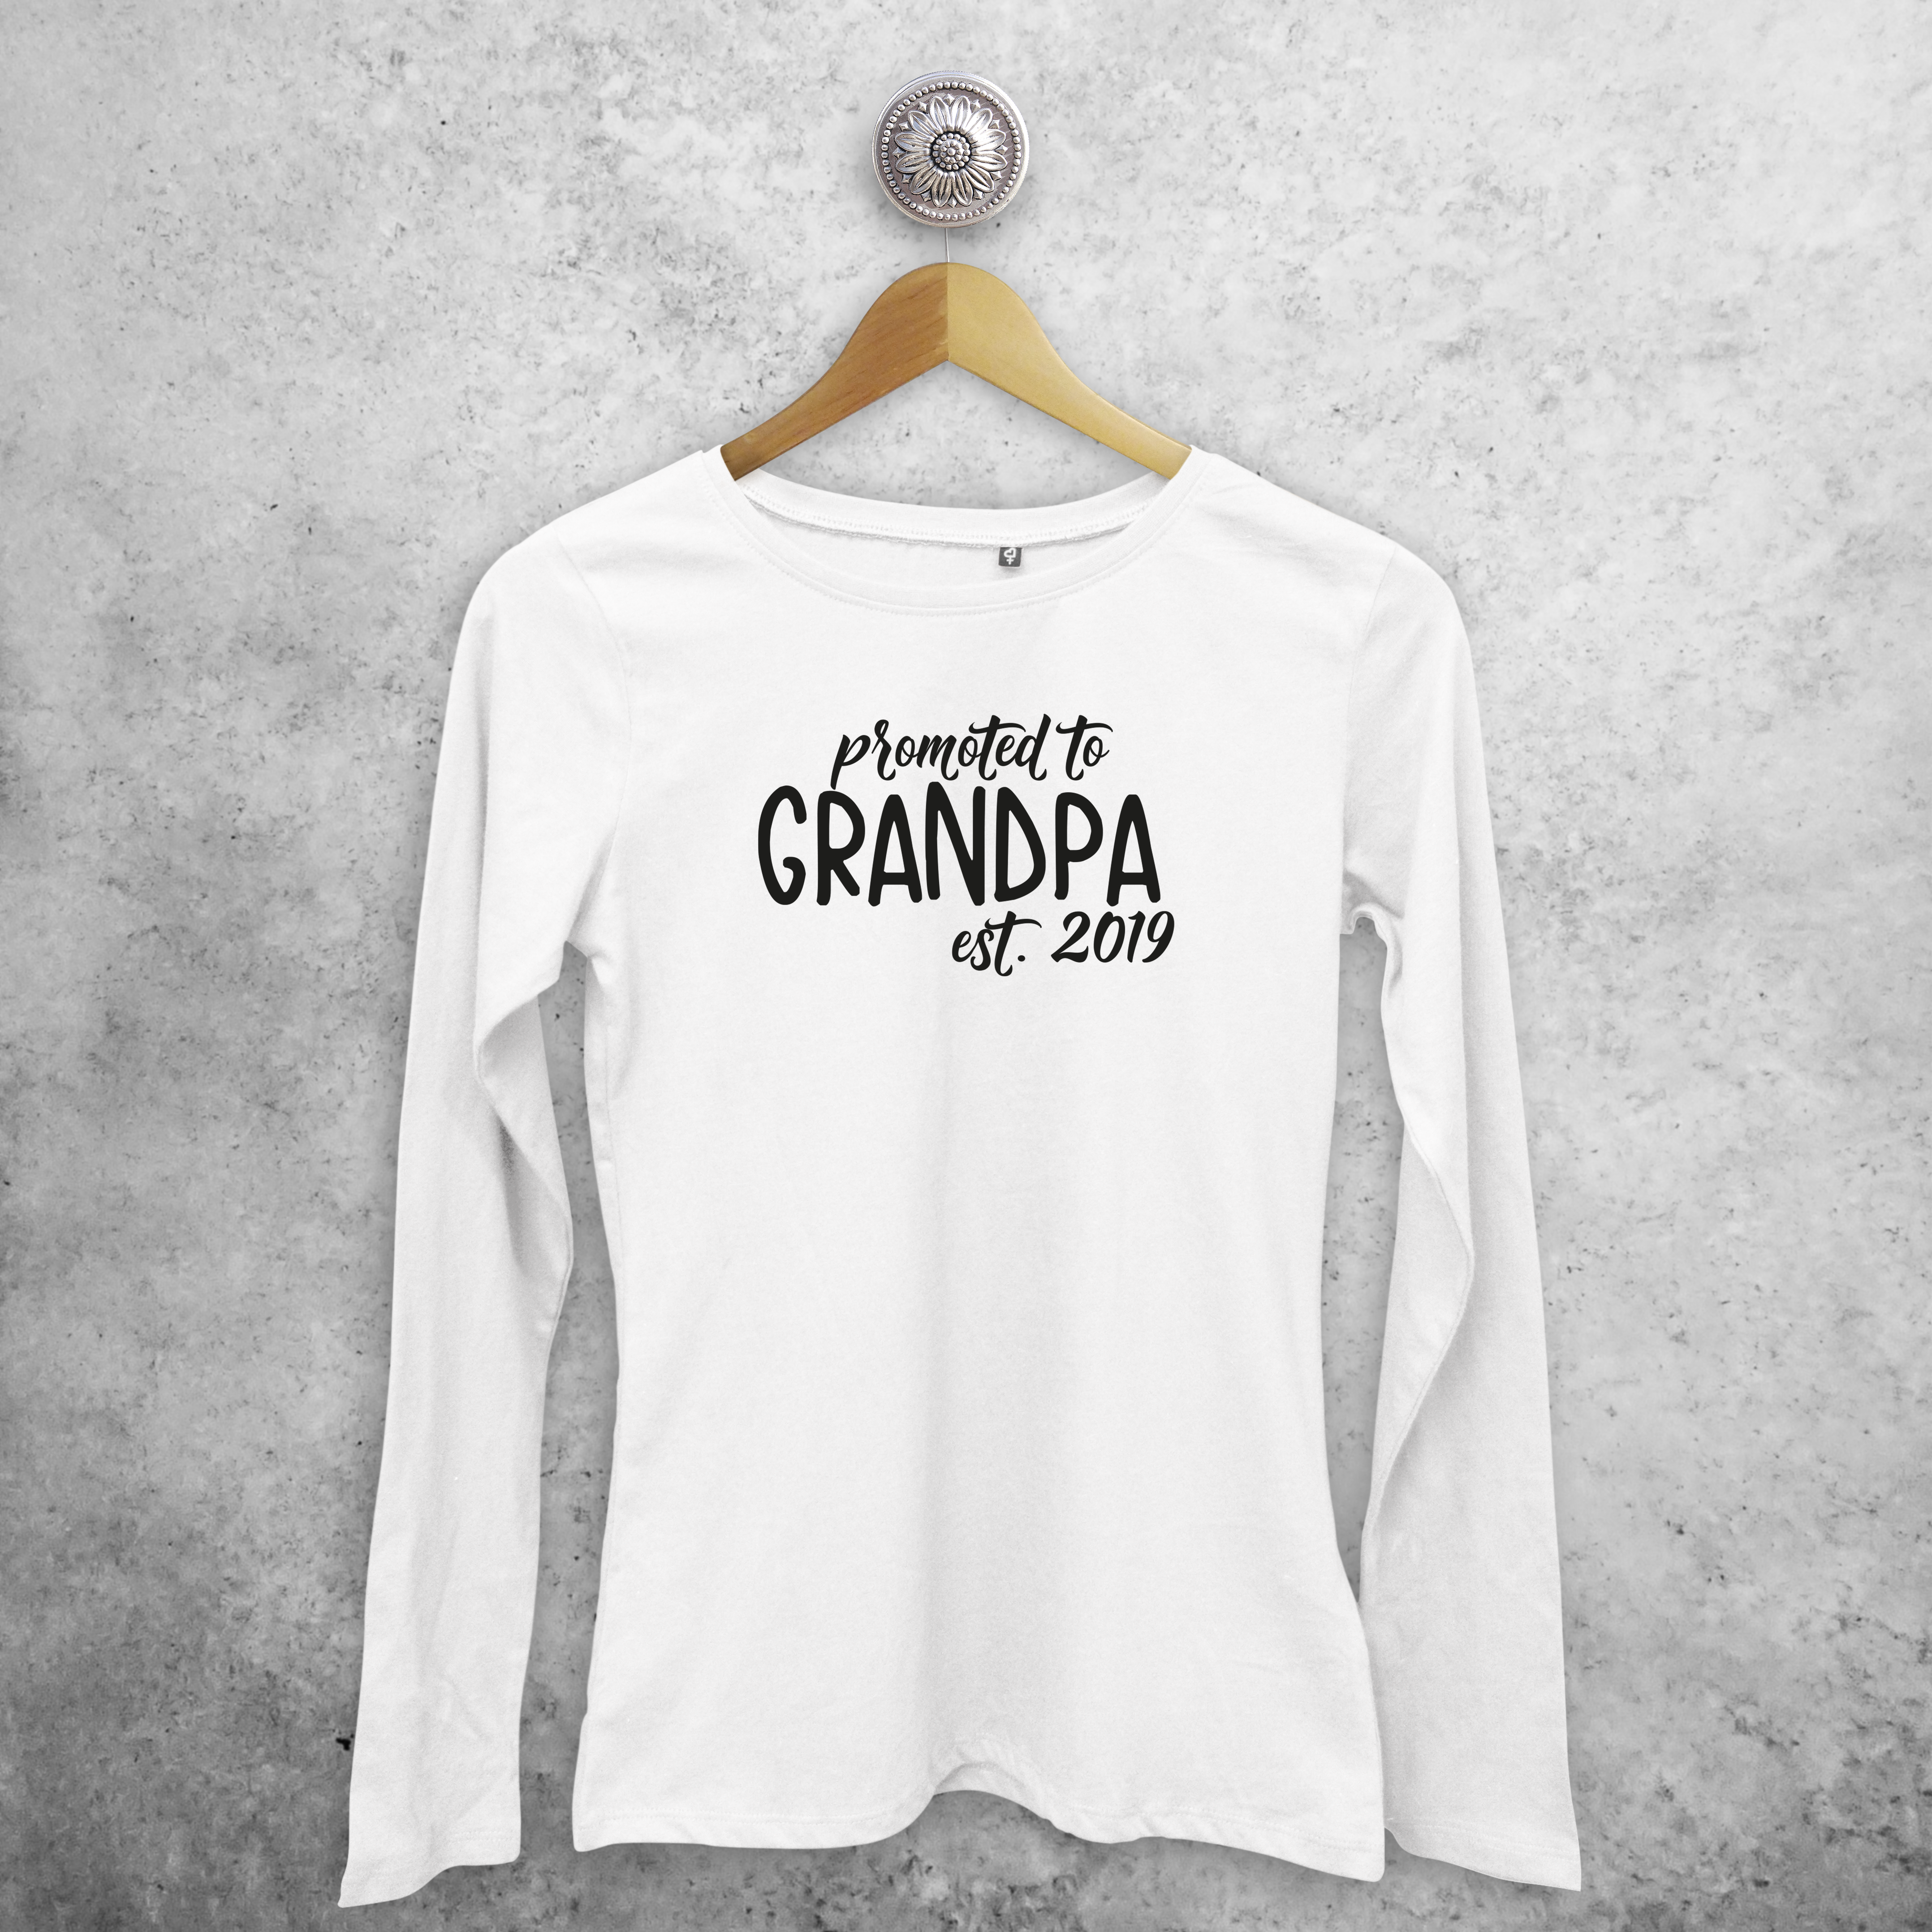 'Promoted to grandpa' adult longsleeve shirt